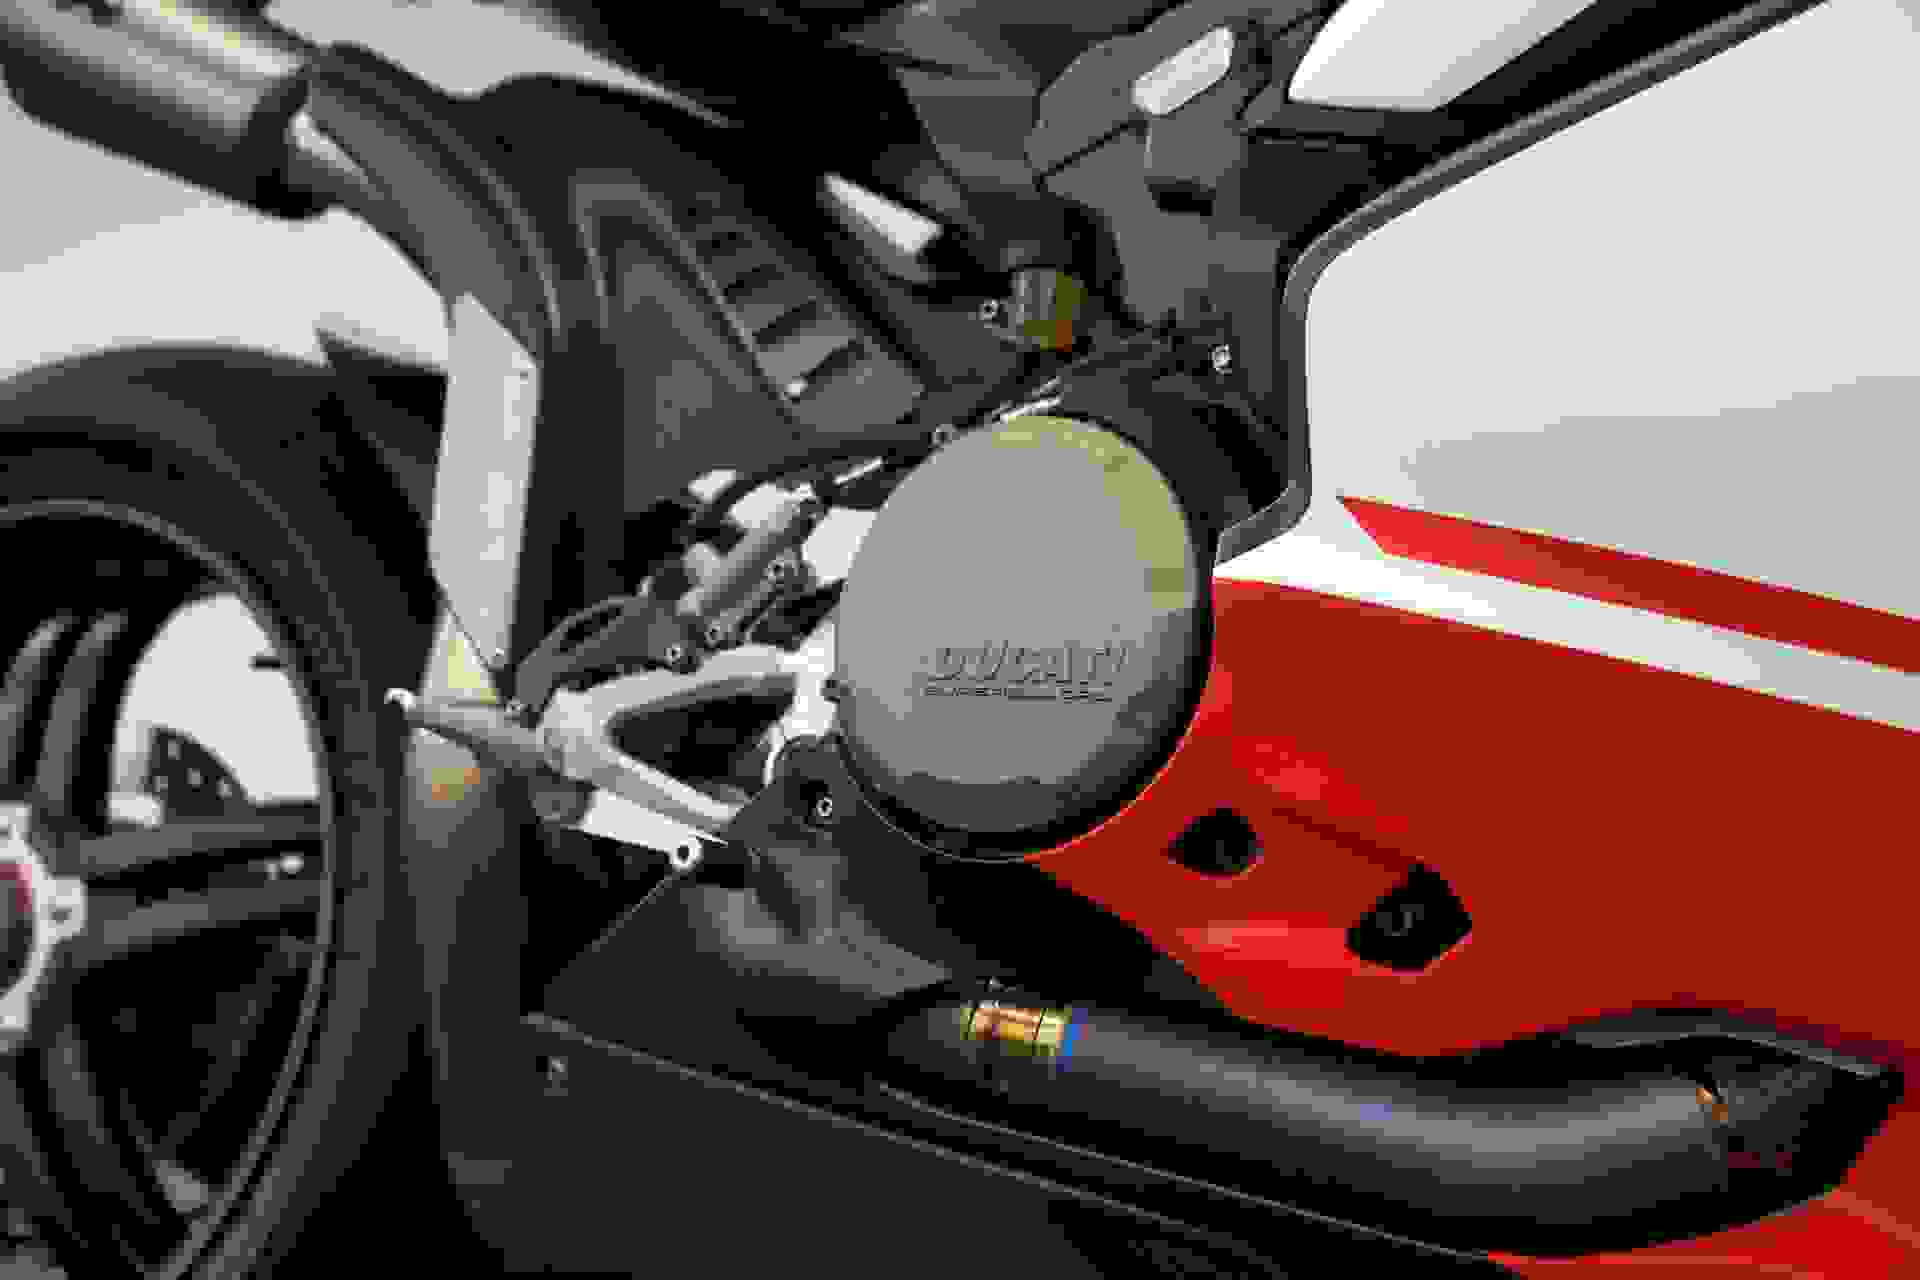 Ducati Superleggera Photo b153f684-8bda-4153-a919-9342824cdbfb.jpg